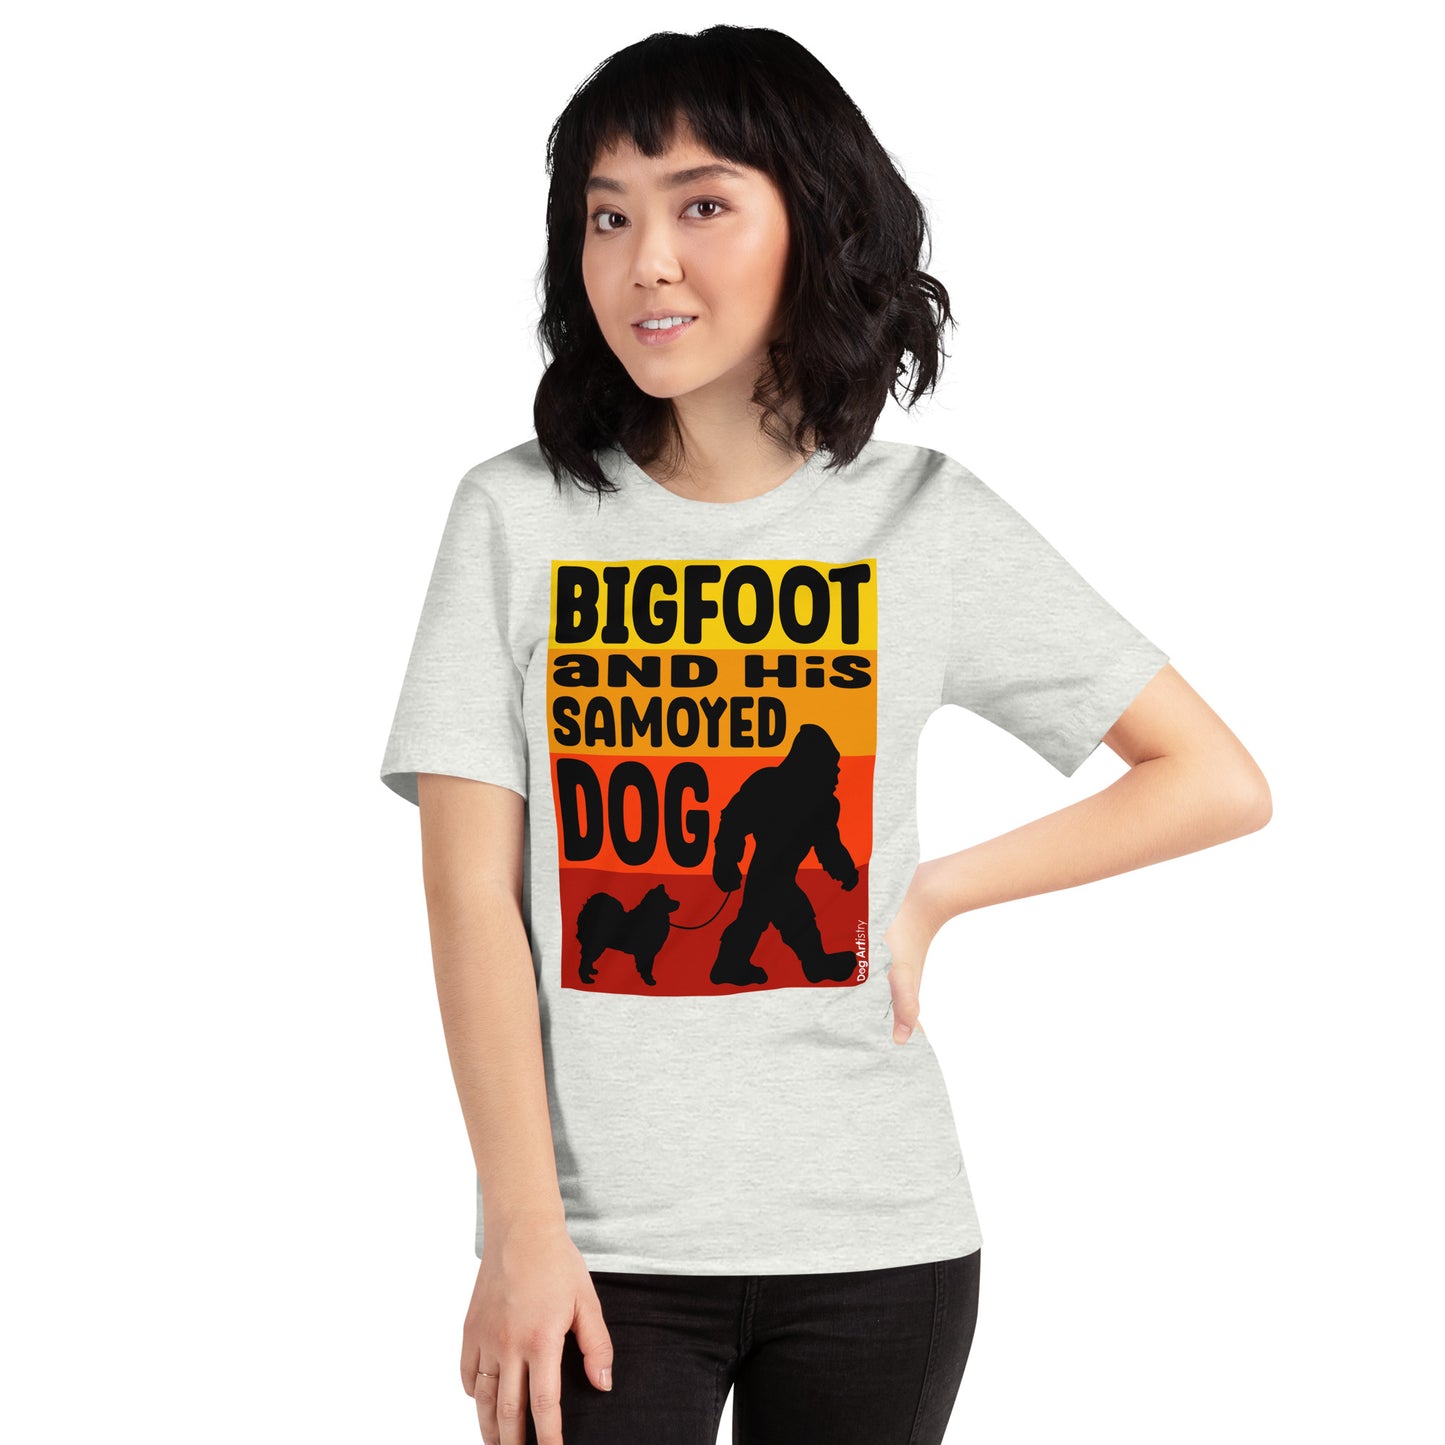 Bigfoot and his Samoyed dog unisex ash t-shirt by Dog Artistry.